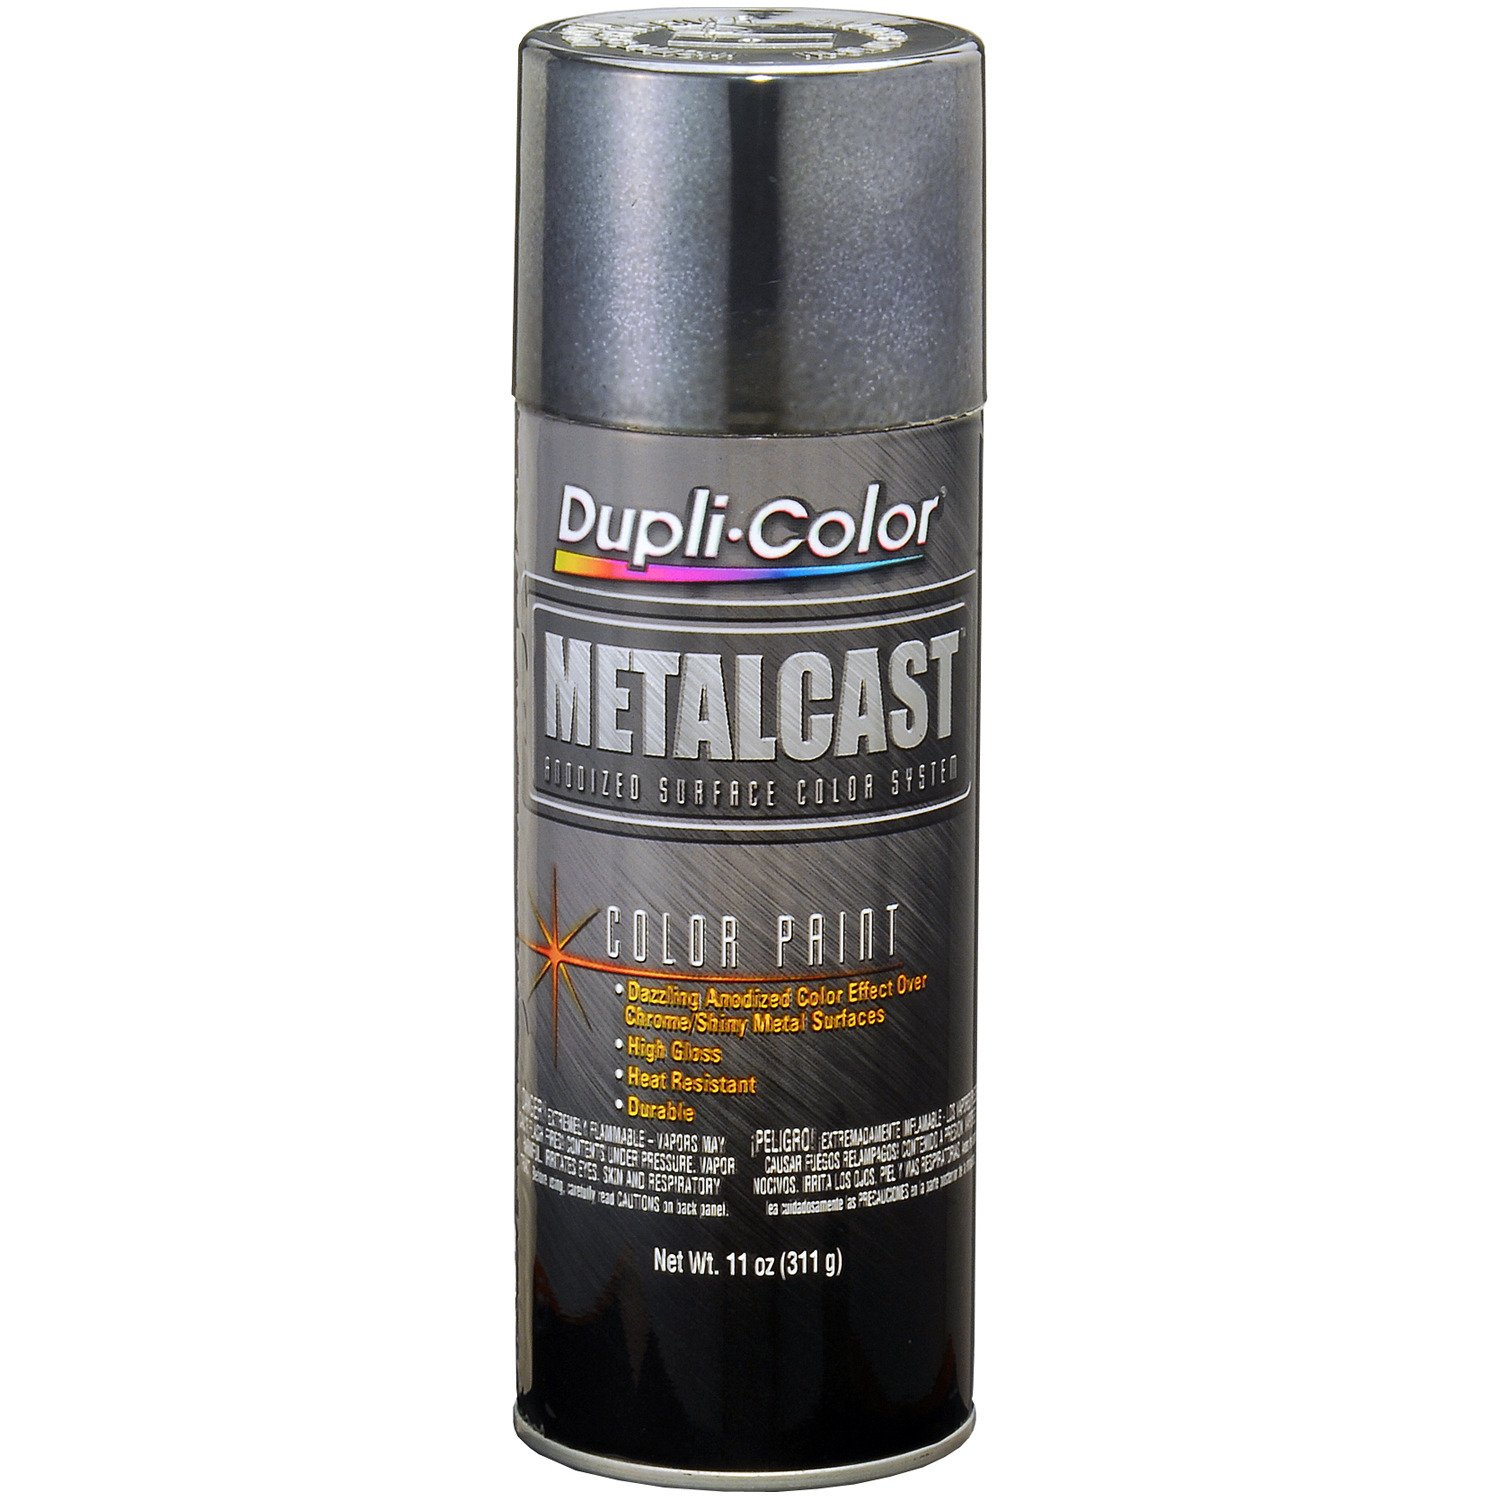 Metalcast Paint Smoke Anodized